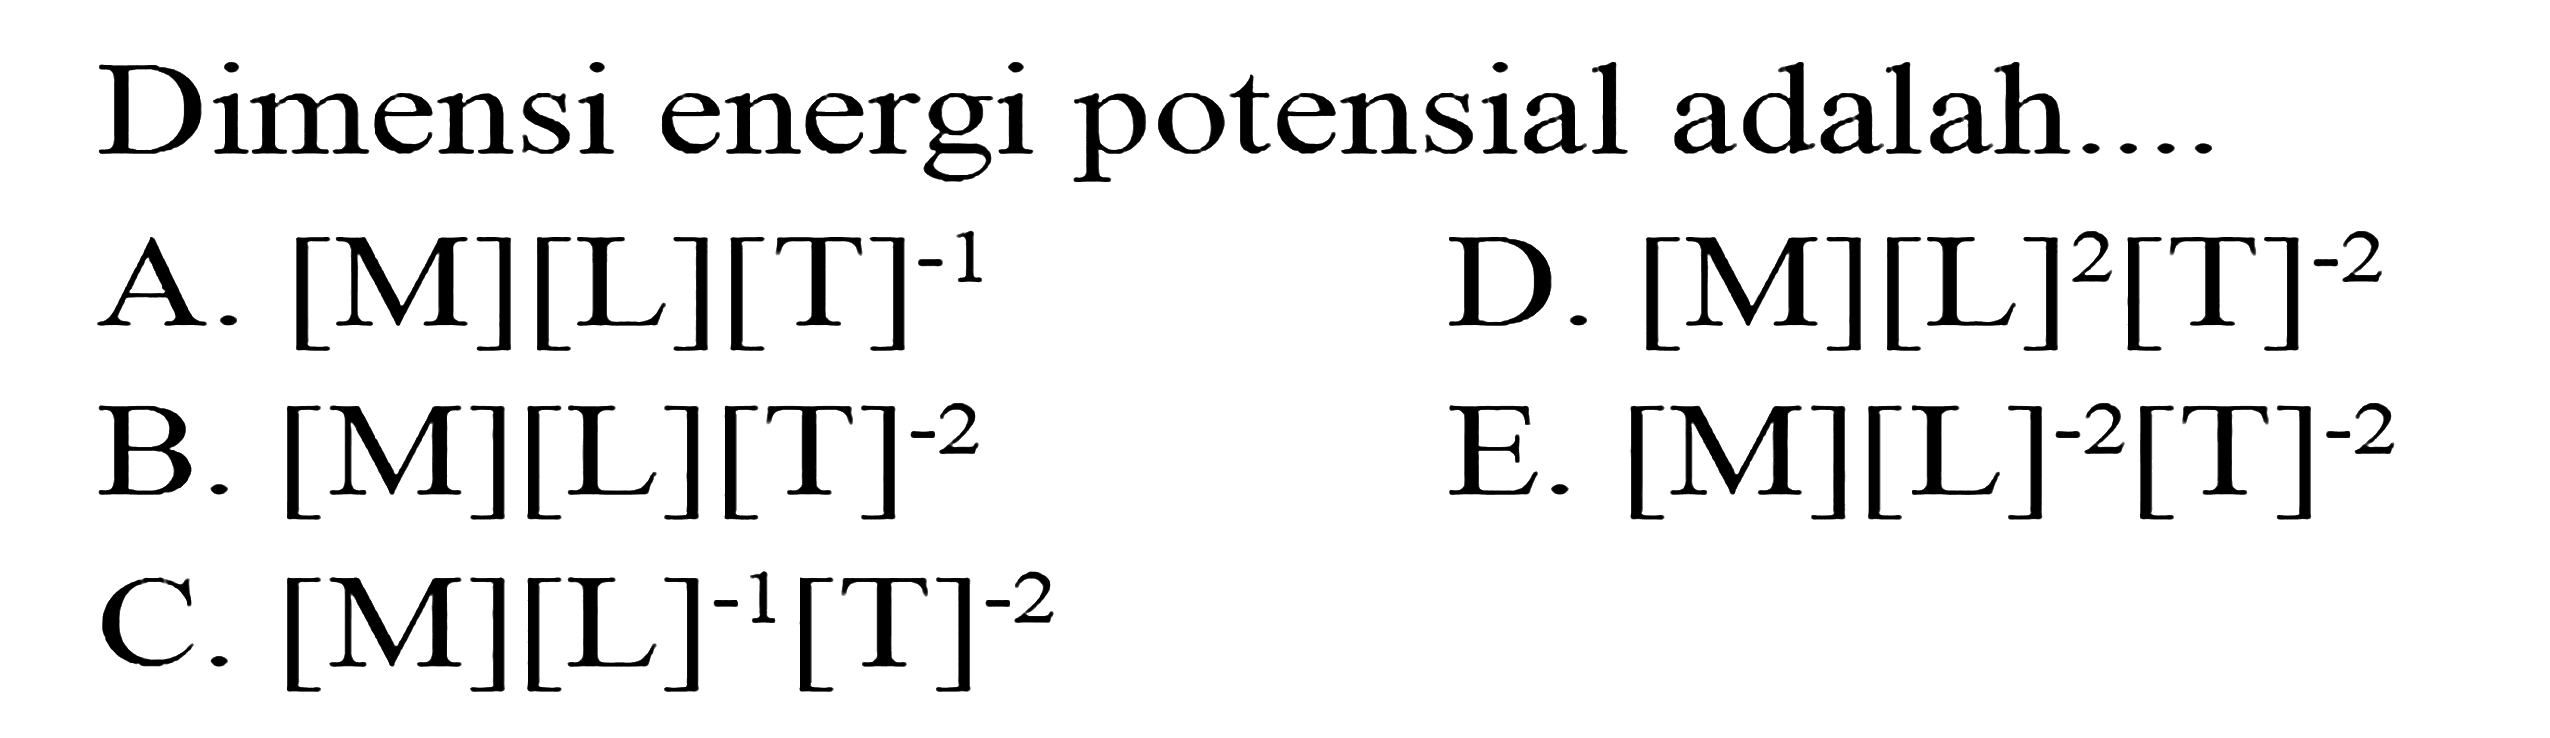 DImensi energi potensial adalah.... A. [M][L][T]^-1 B. [M][L][T]^-2 C. [M][L]^-1[T]^-2 D. [M][L]^2[T]^-2 E. [M][L]^-2[T]^-2 